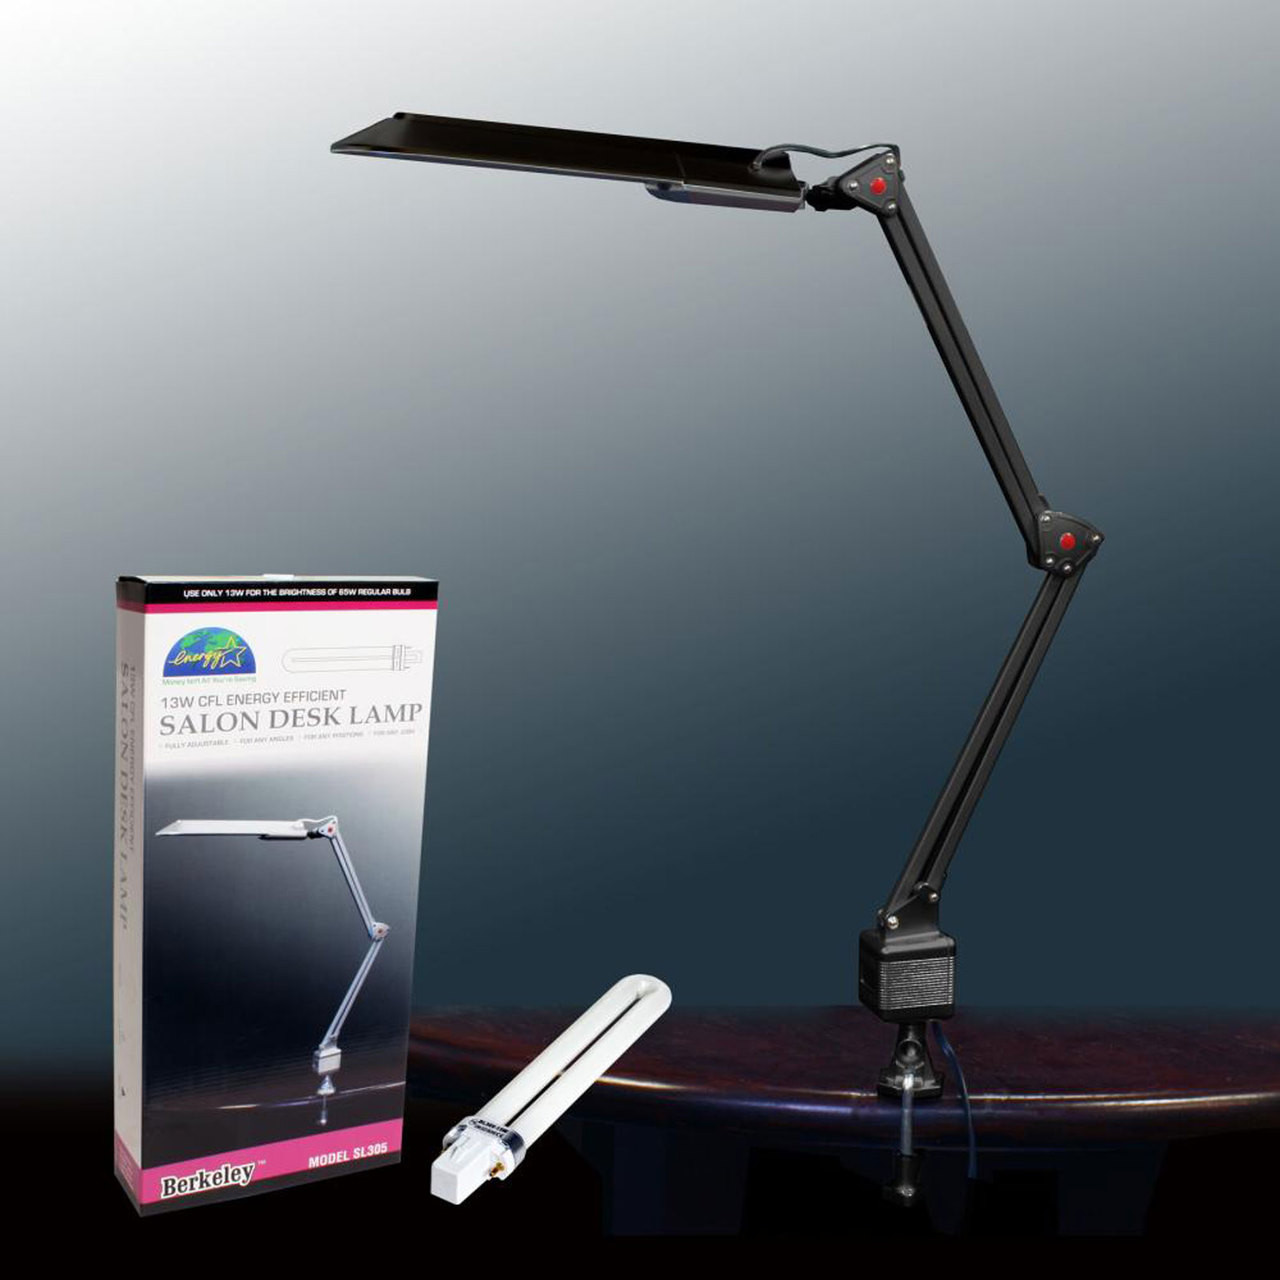 Energy Efficent Salon Desk Lamp with Bulb 13W Black